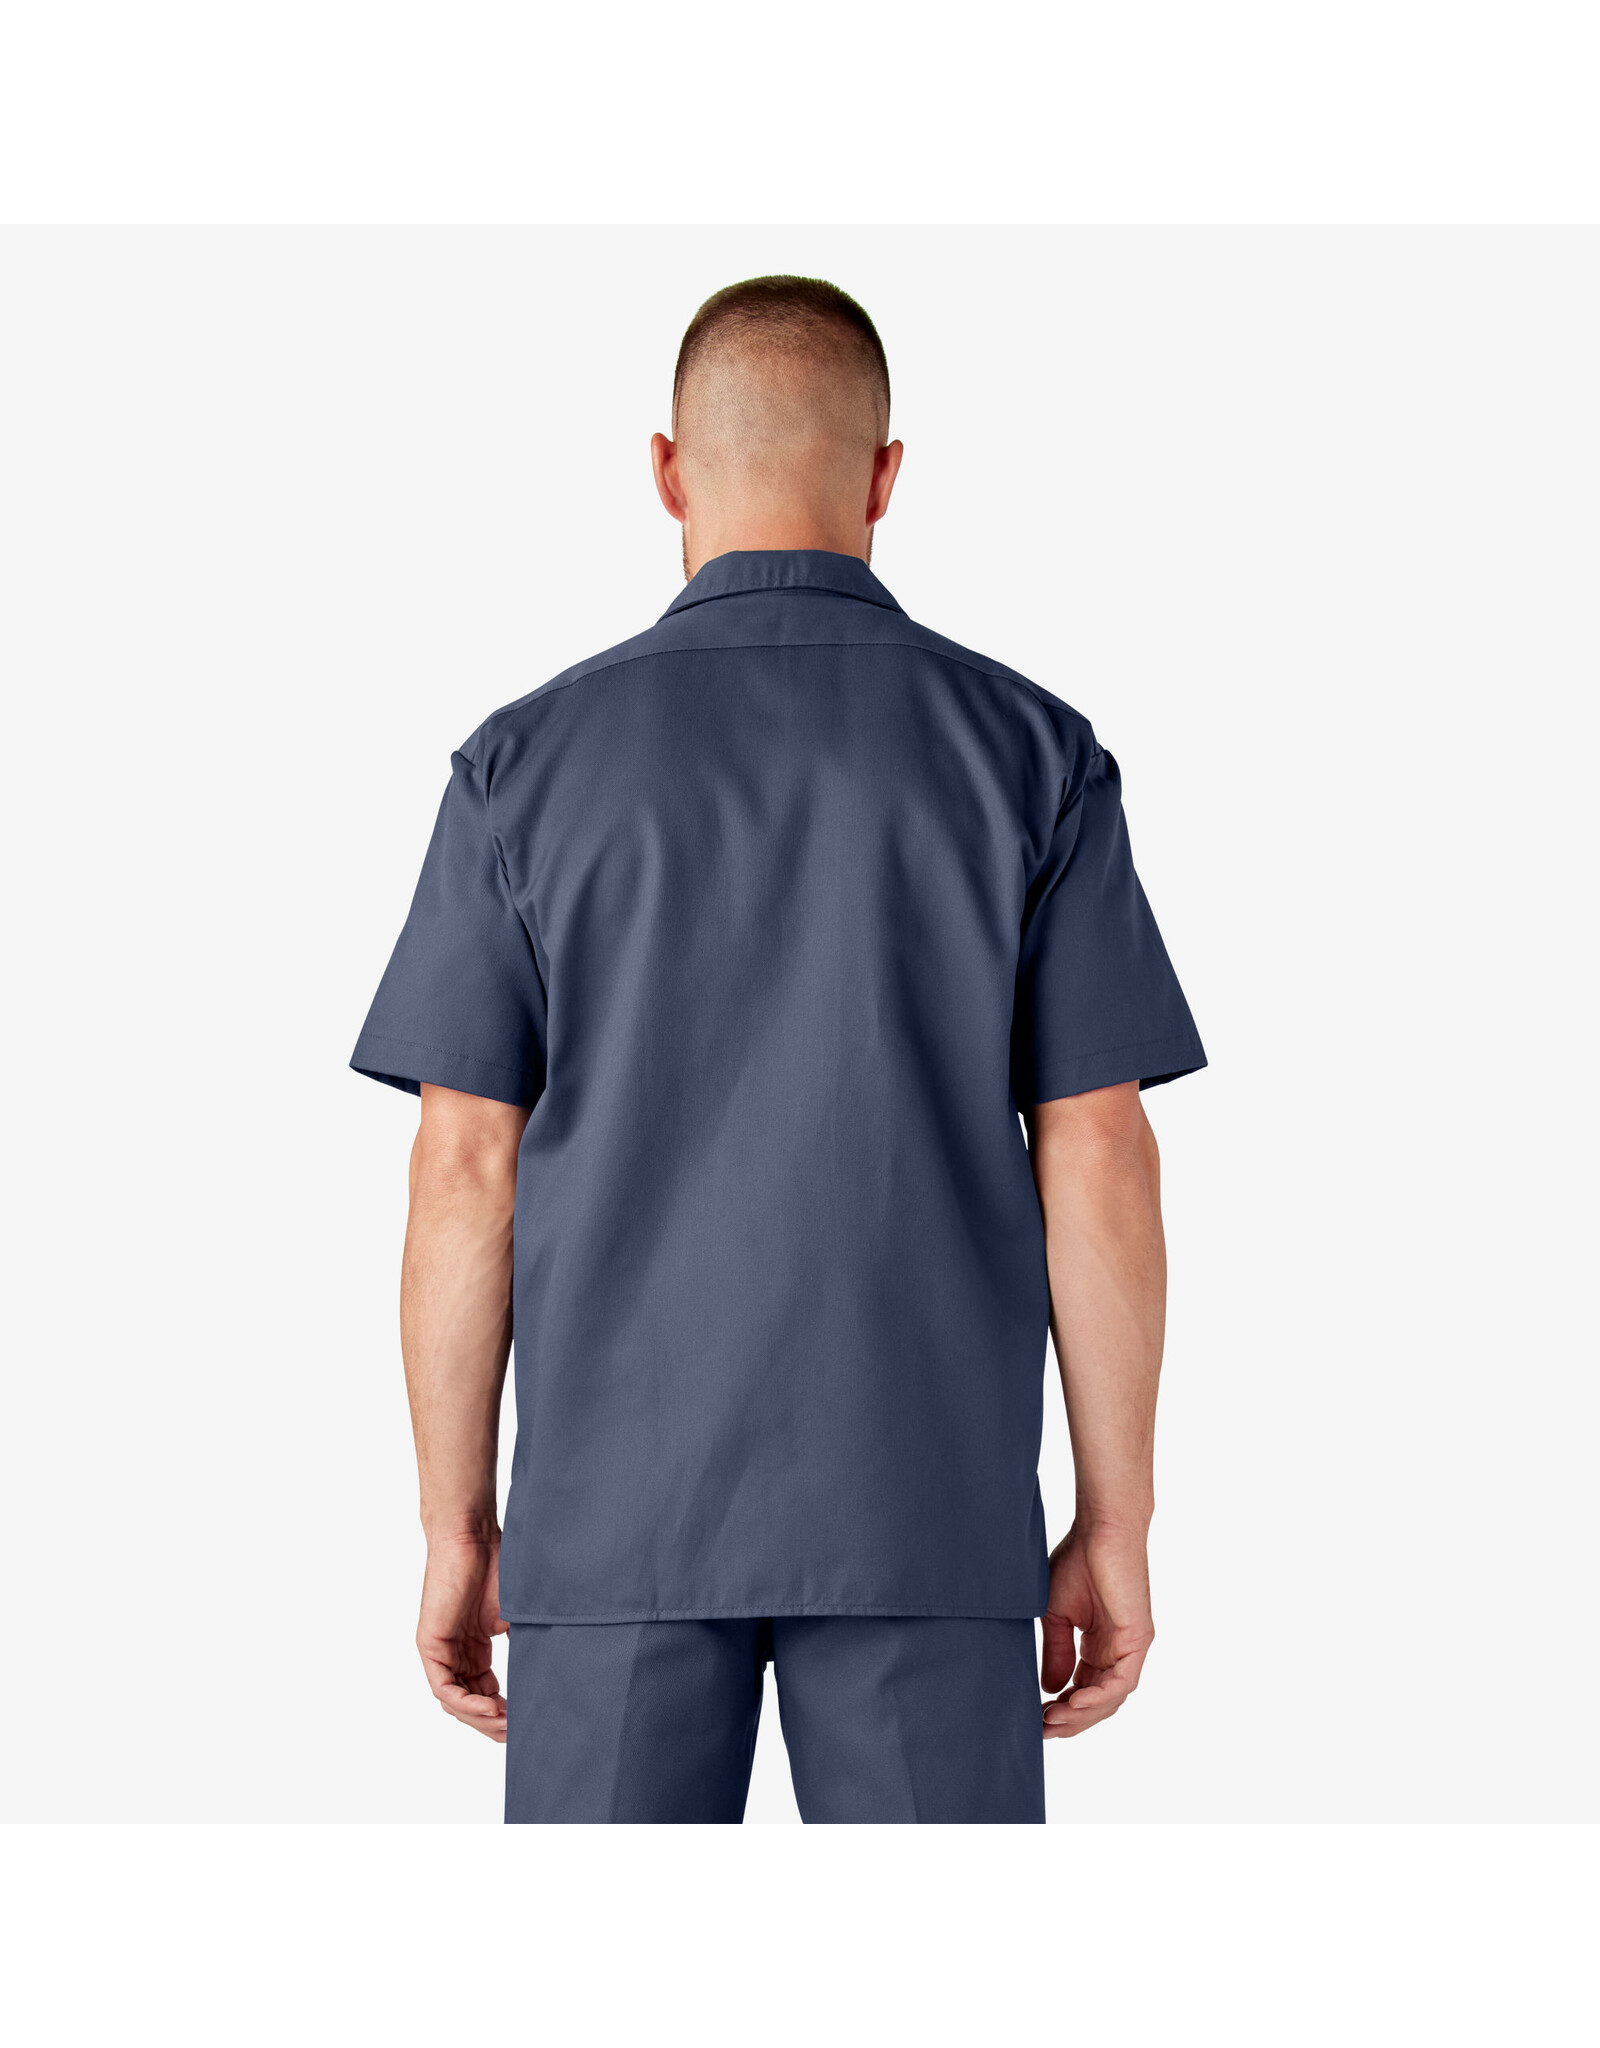 DICKIES Short Sleeve Work Shirt Navy Original Fit - 1574NV